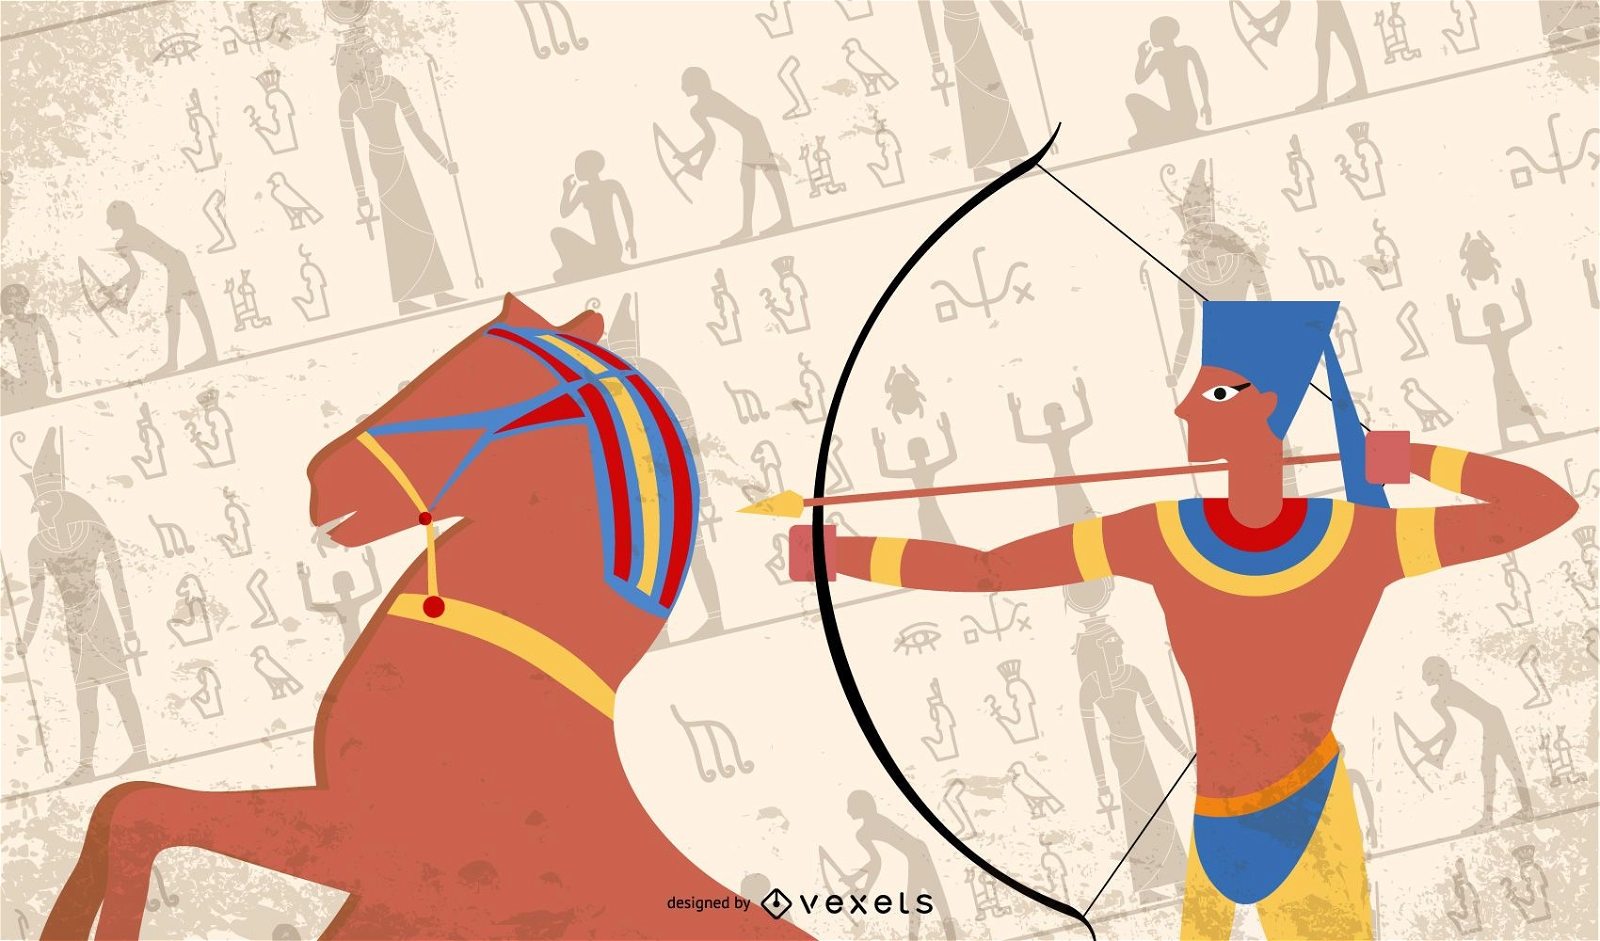 Rams?s II na Batalha de Kadesh